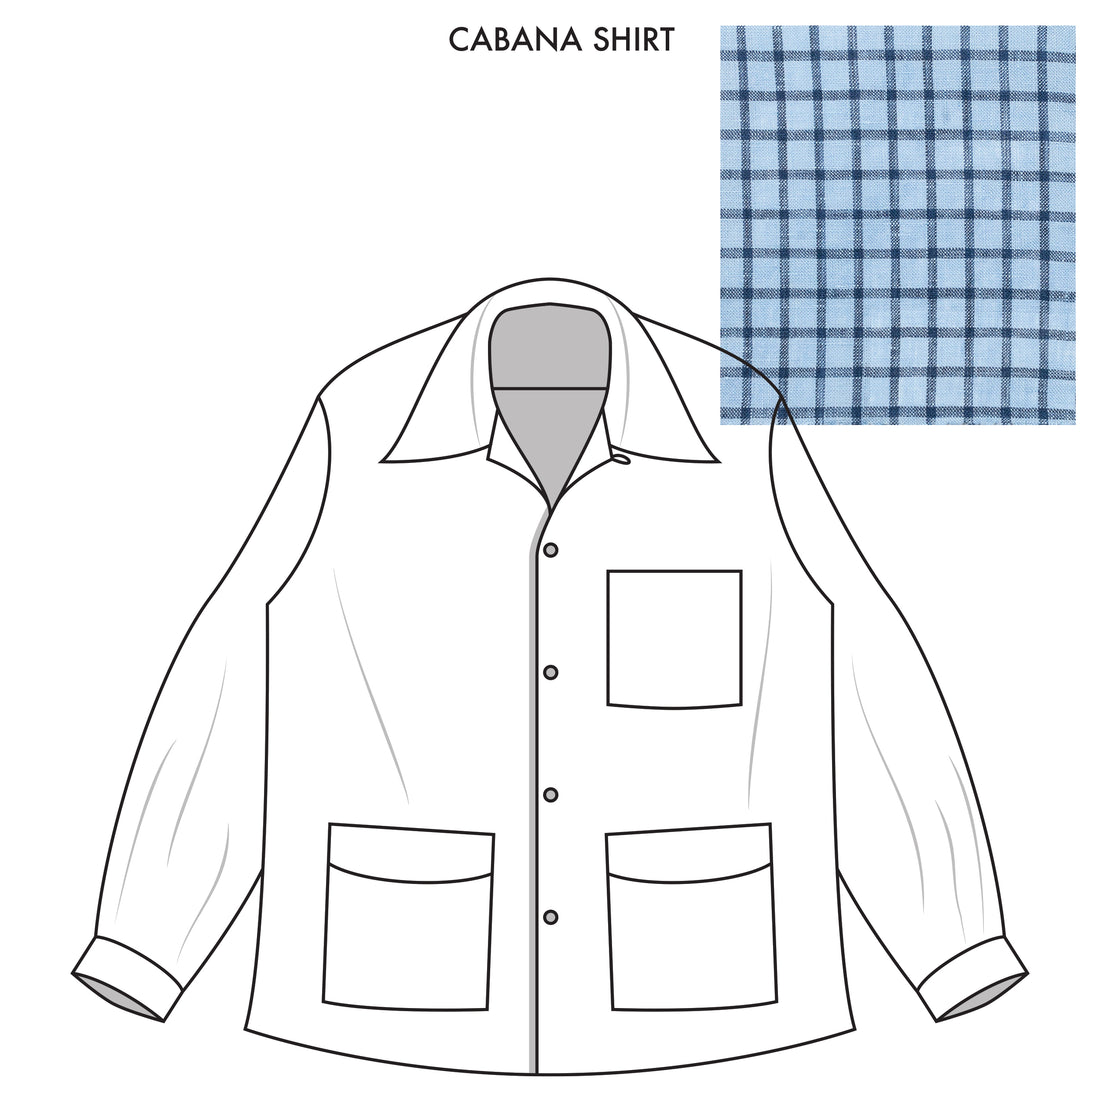 Bryceland's Cabana Shirt Made-to-Order Blue/Navy